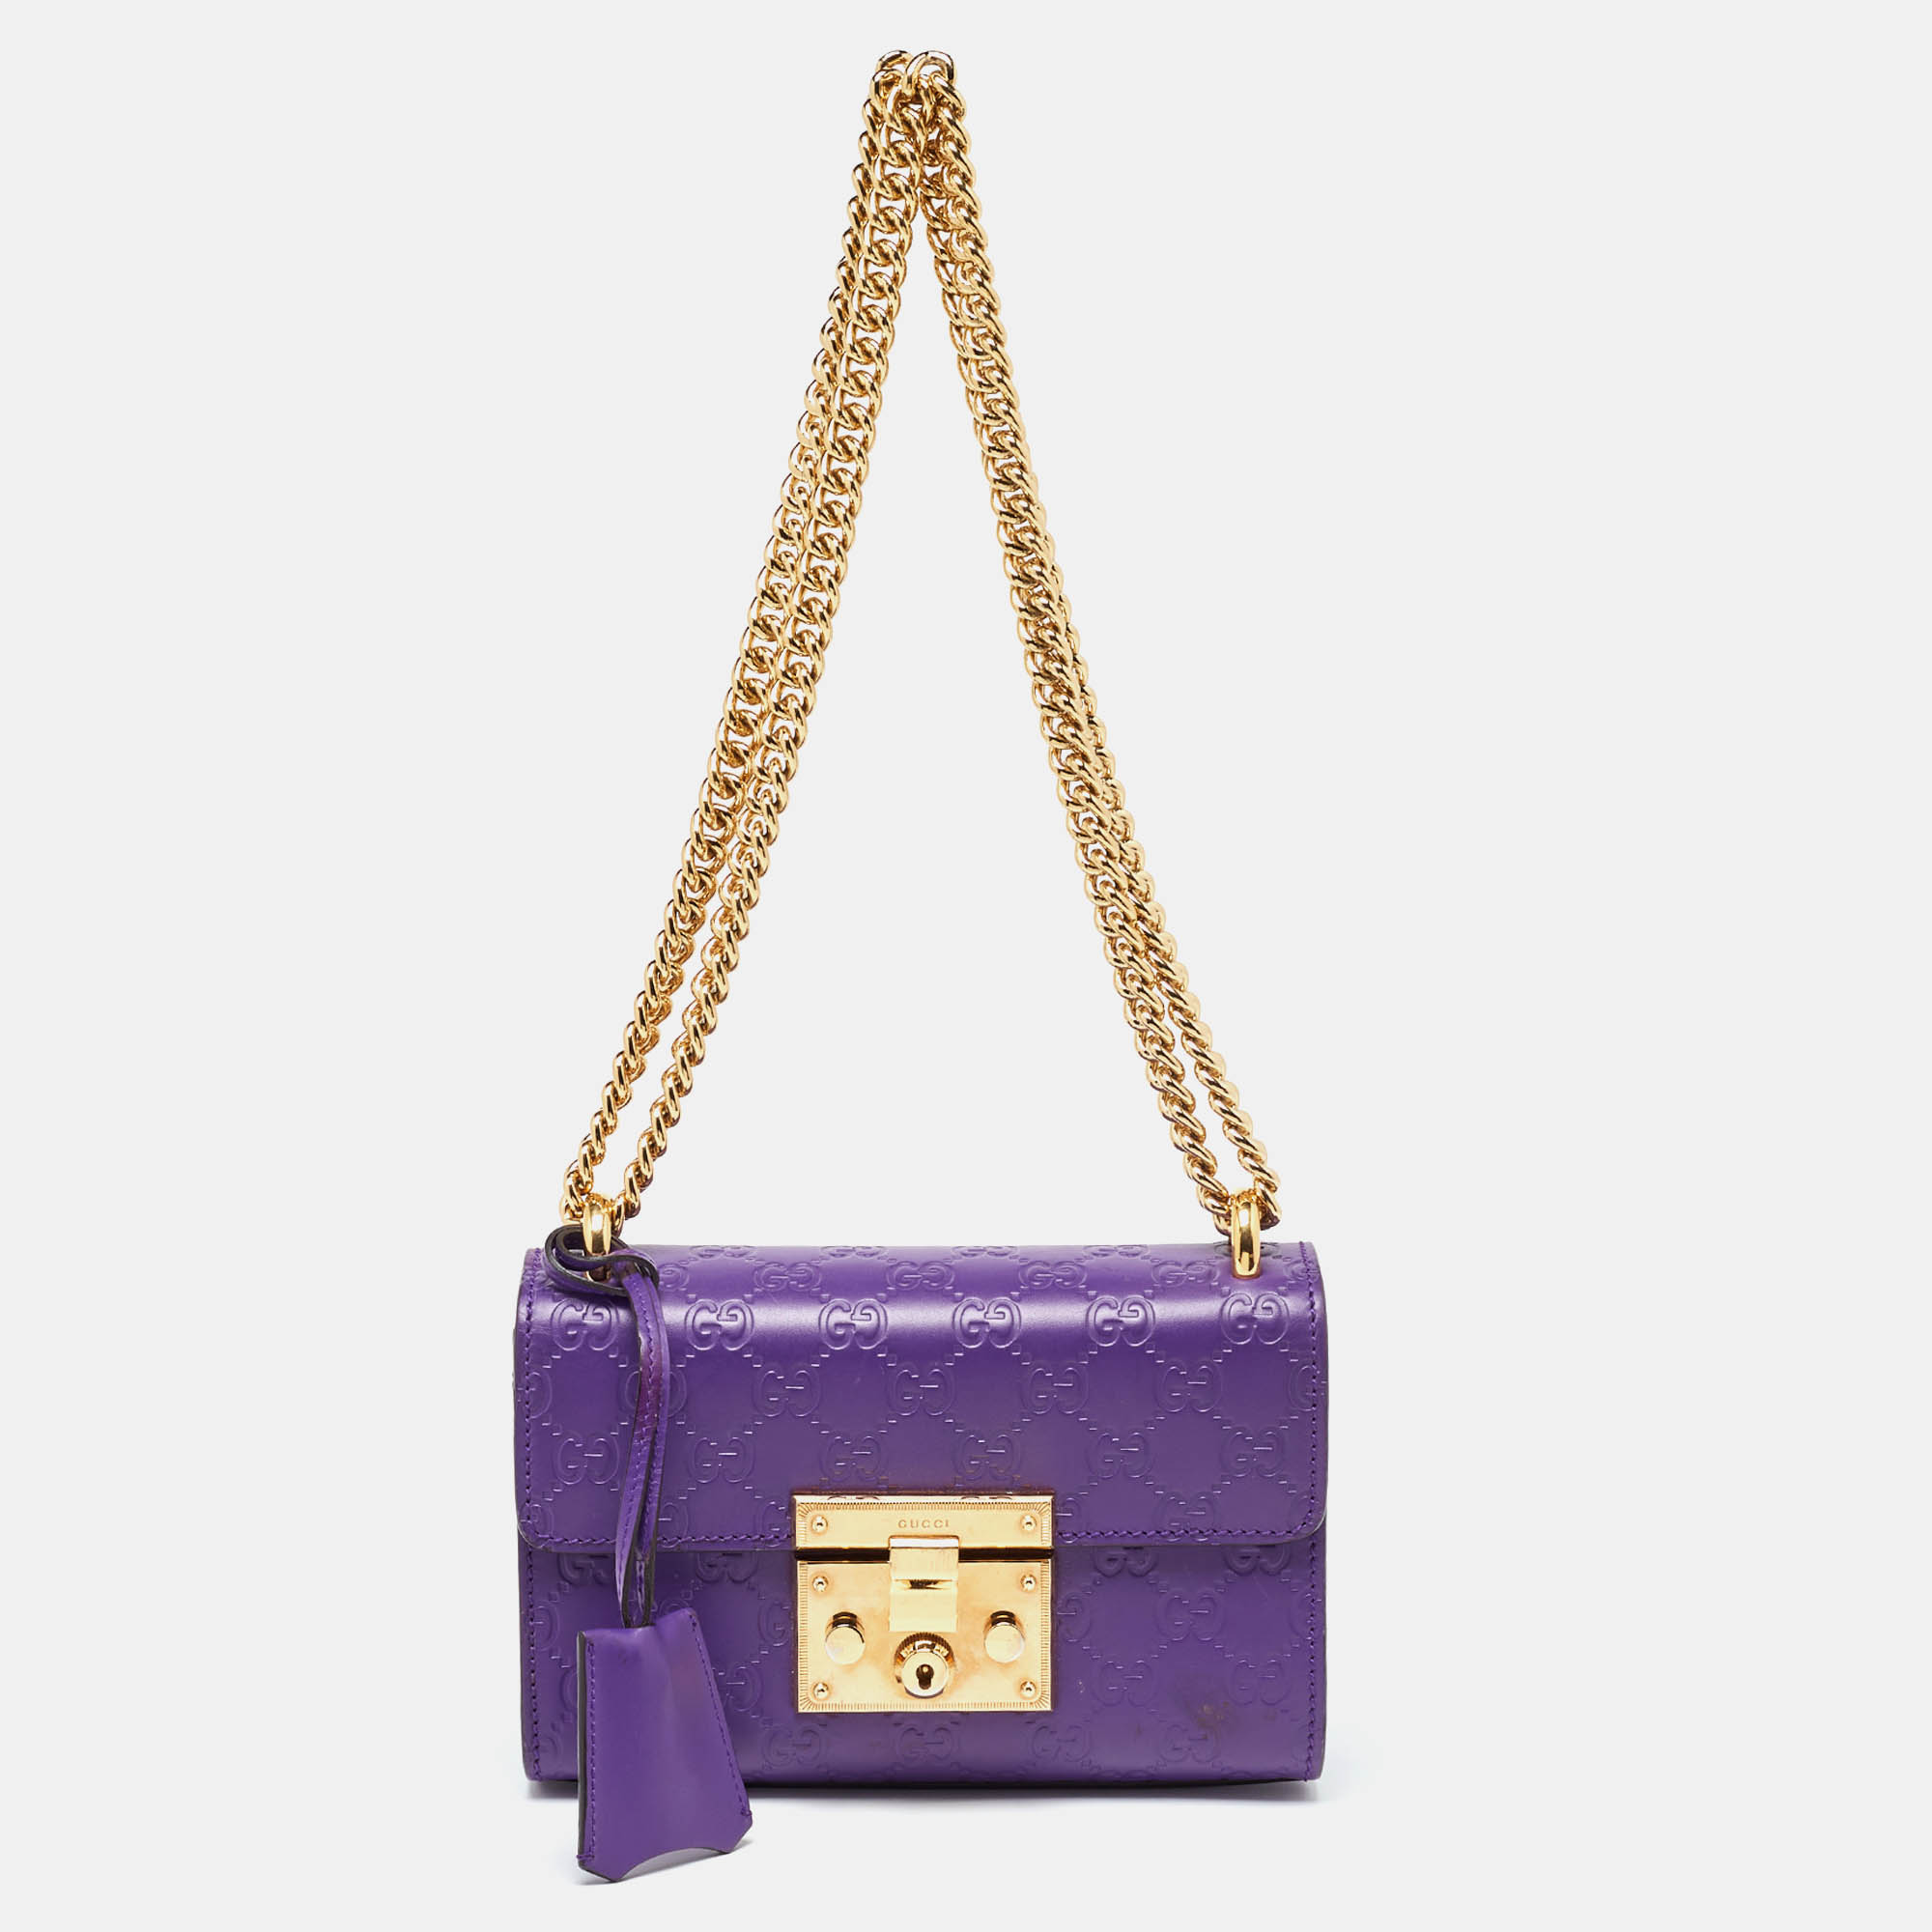 Gucci purple guccissima leather small padlock shoulder bag